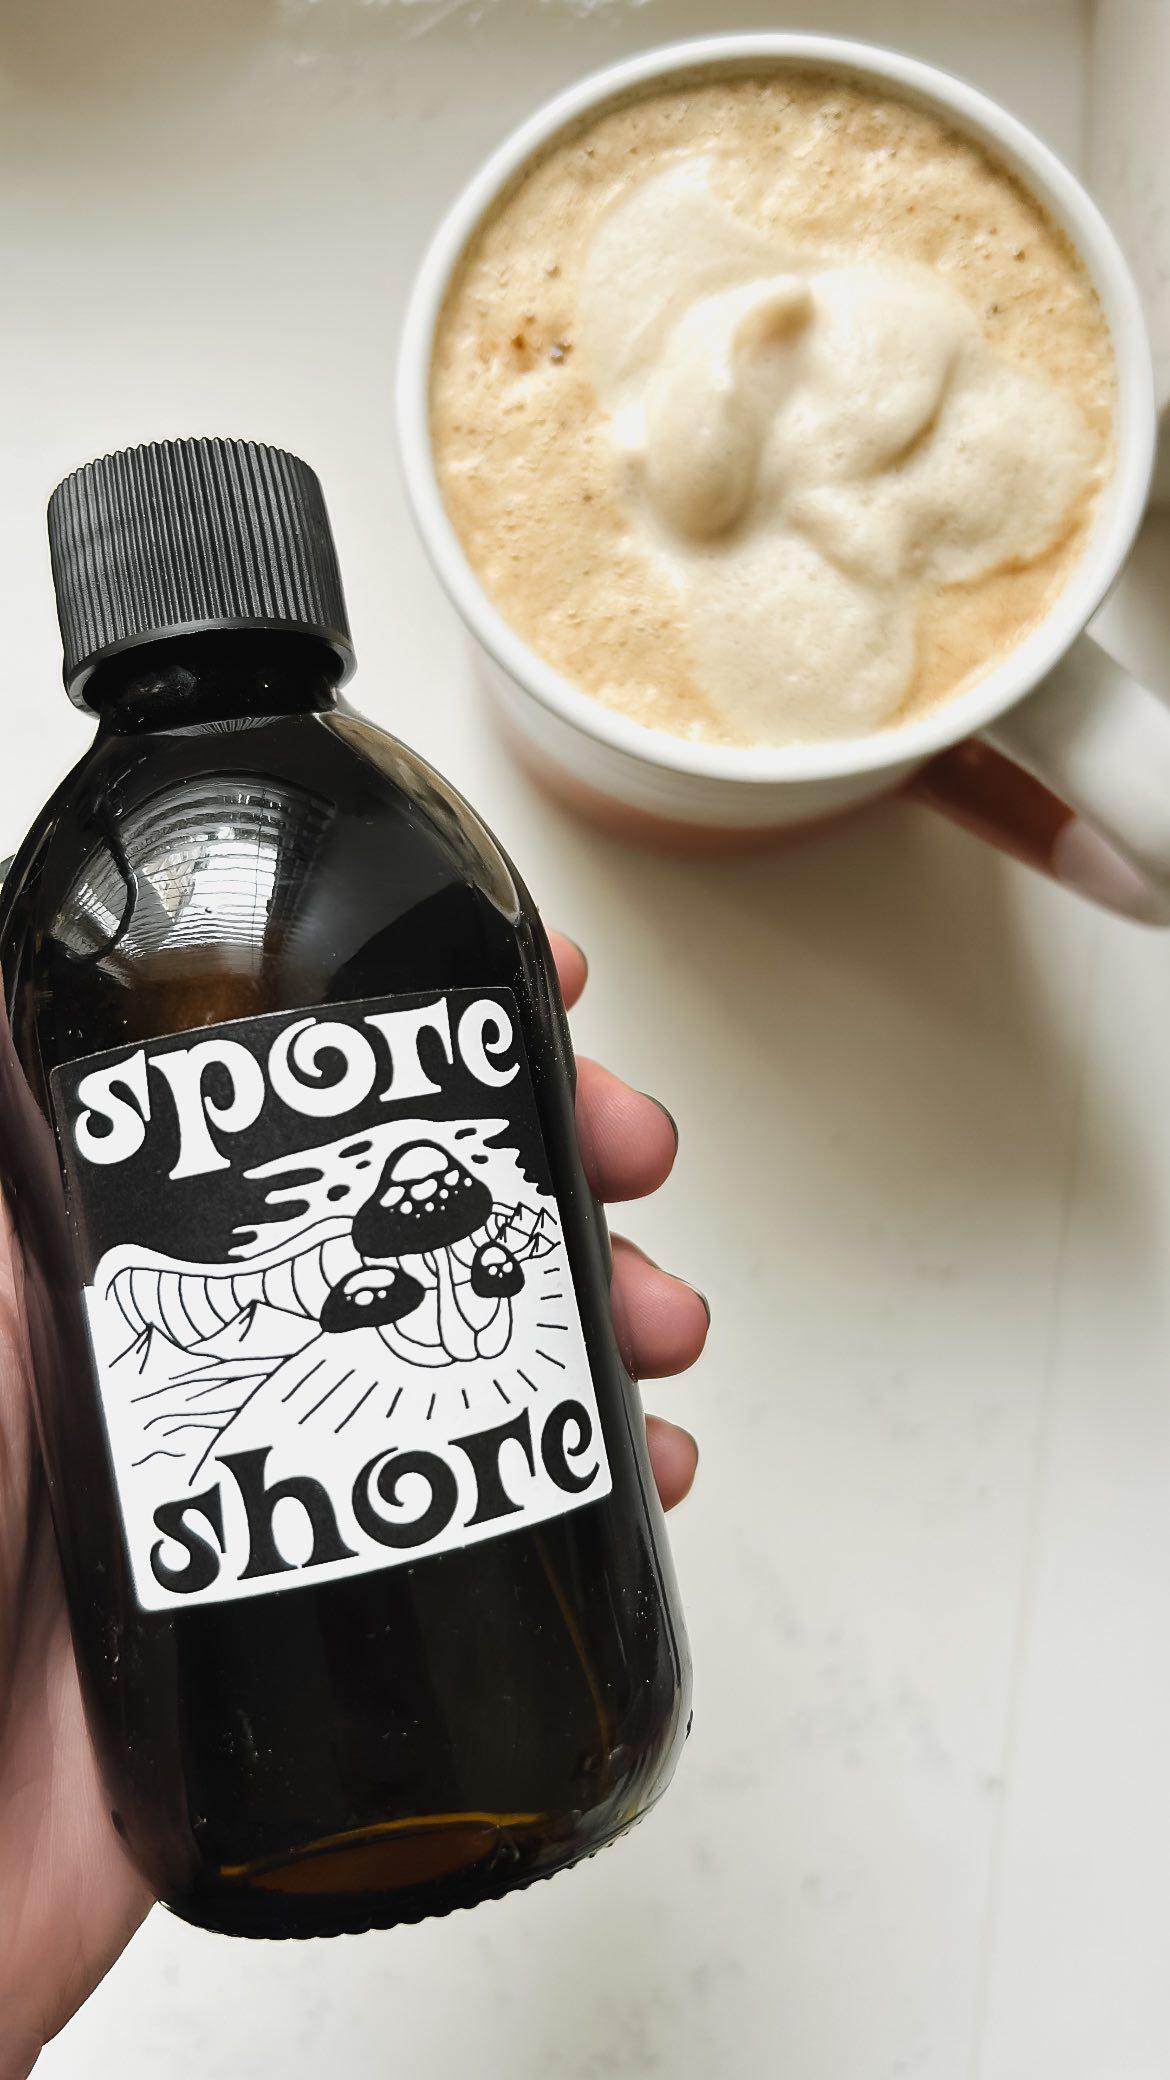 SporeShore Shroom Juice